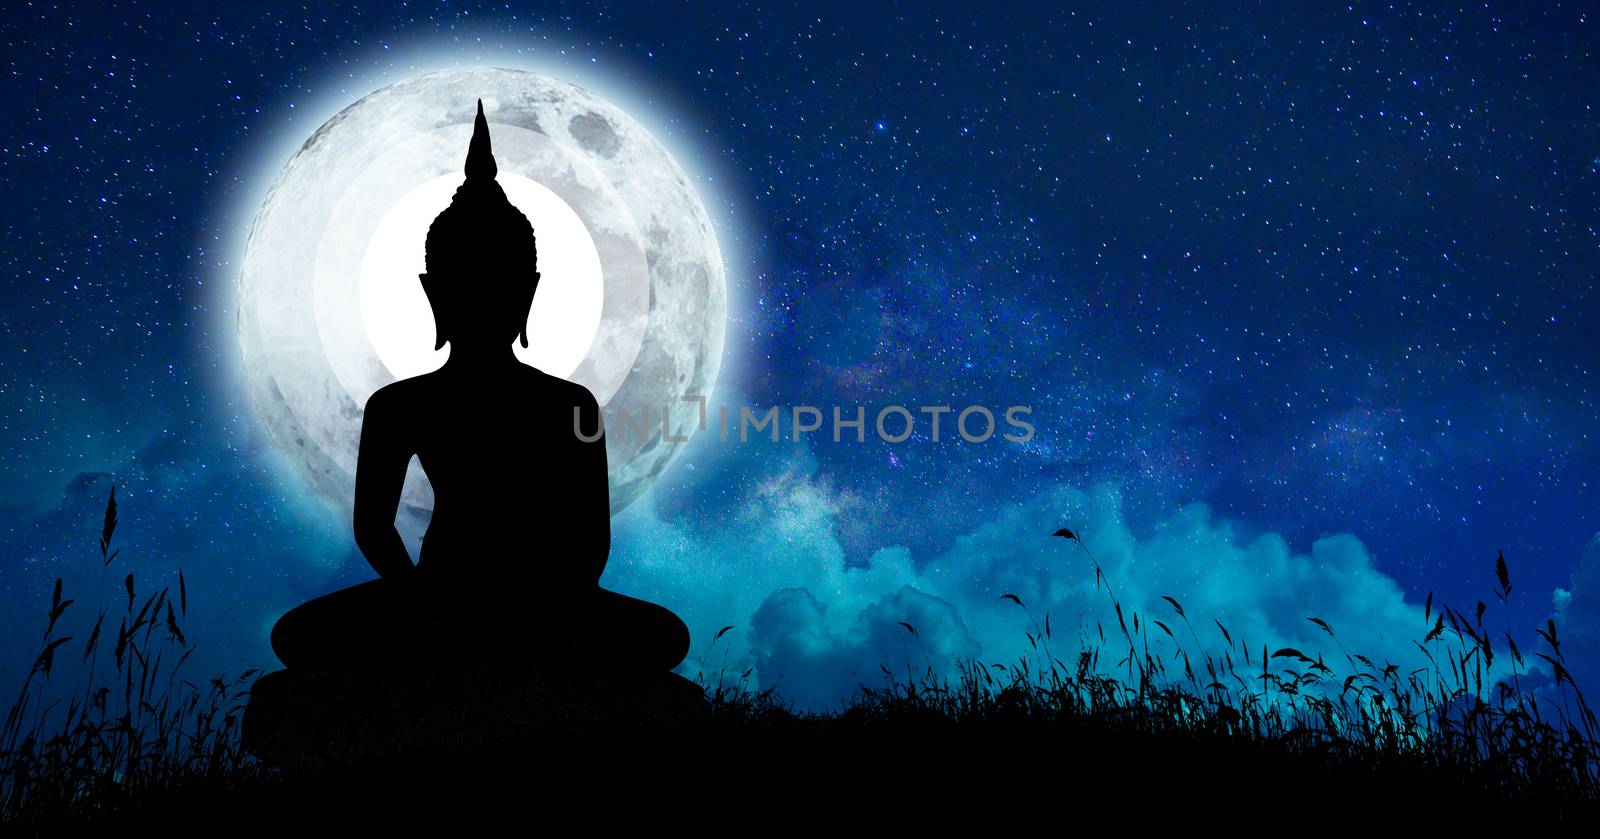 The Buddha meditated among many stars and a large moon. by sarayut_thaneerat